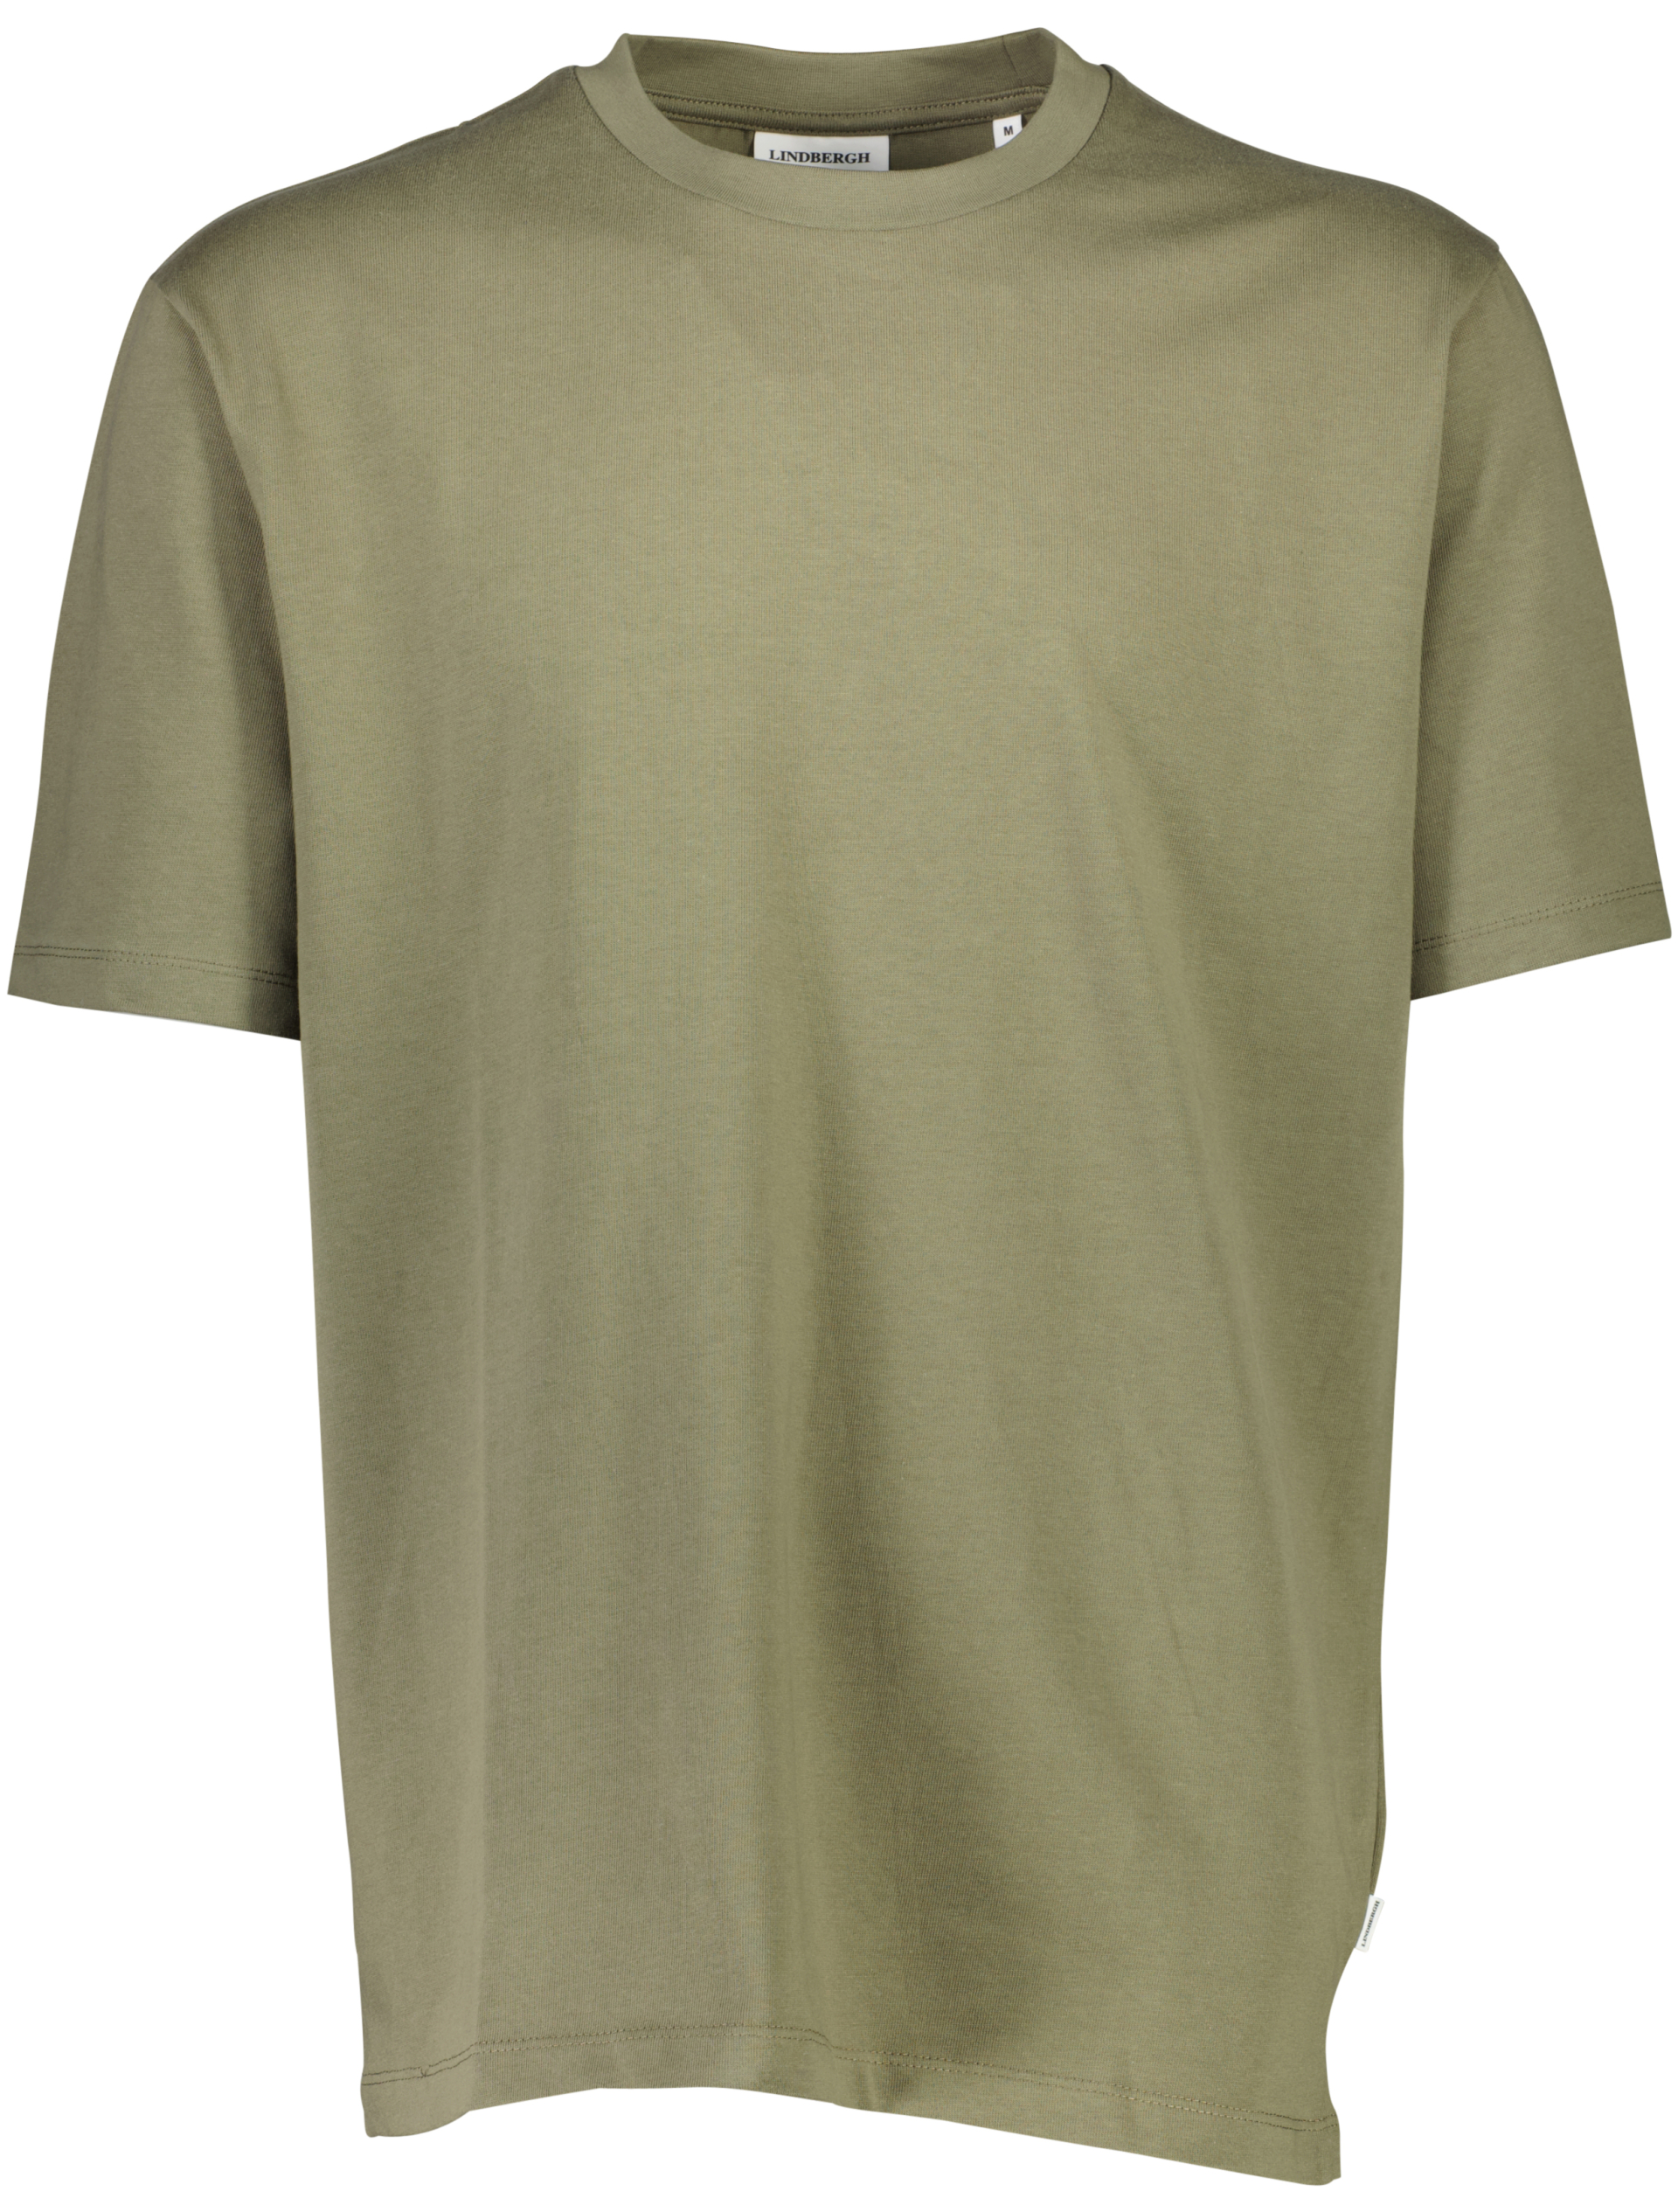 Lindbergh T-shirt grön / army